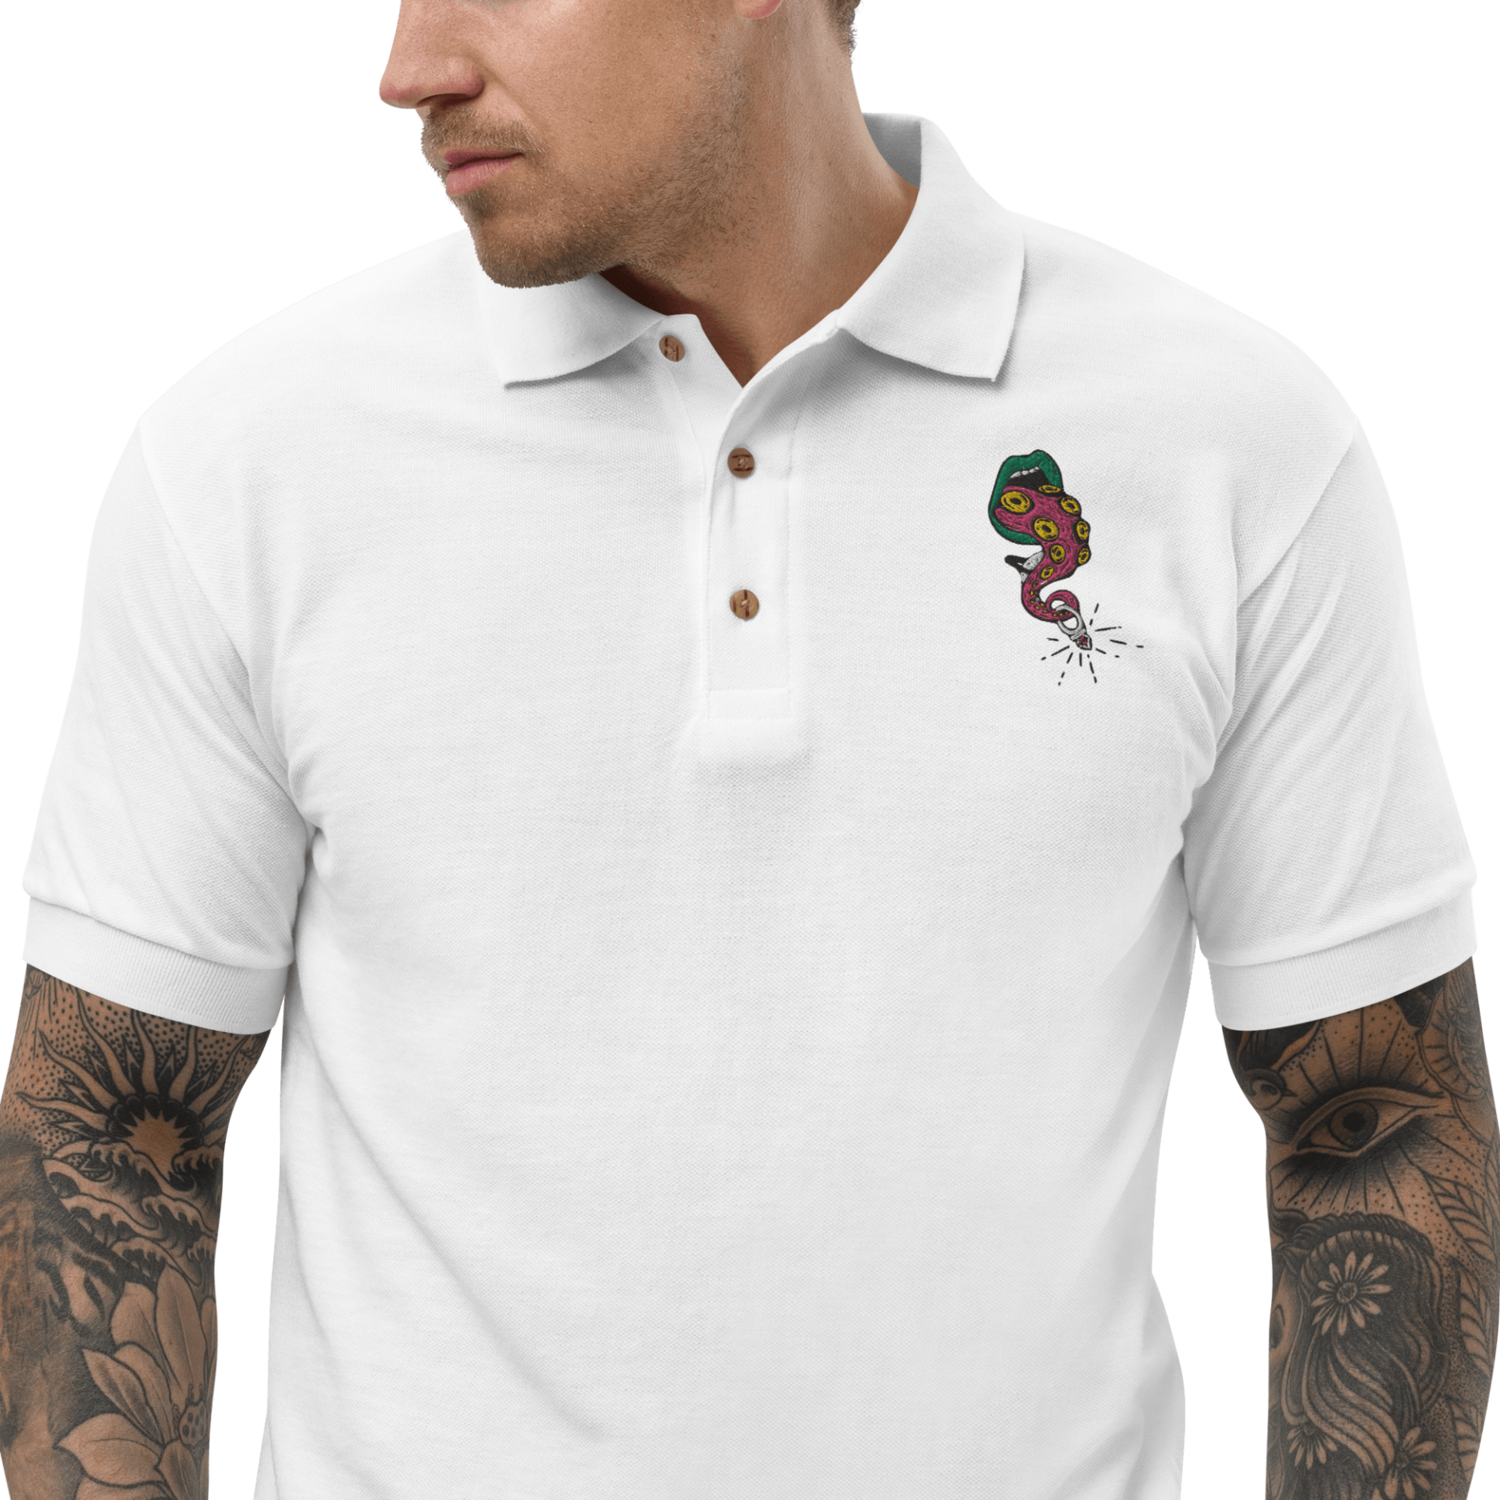 DTO Embroidered Polo Shirt - White